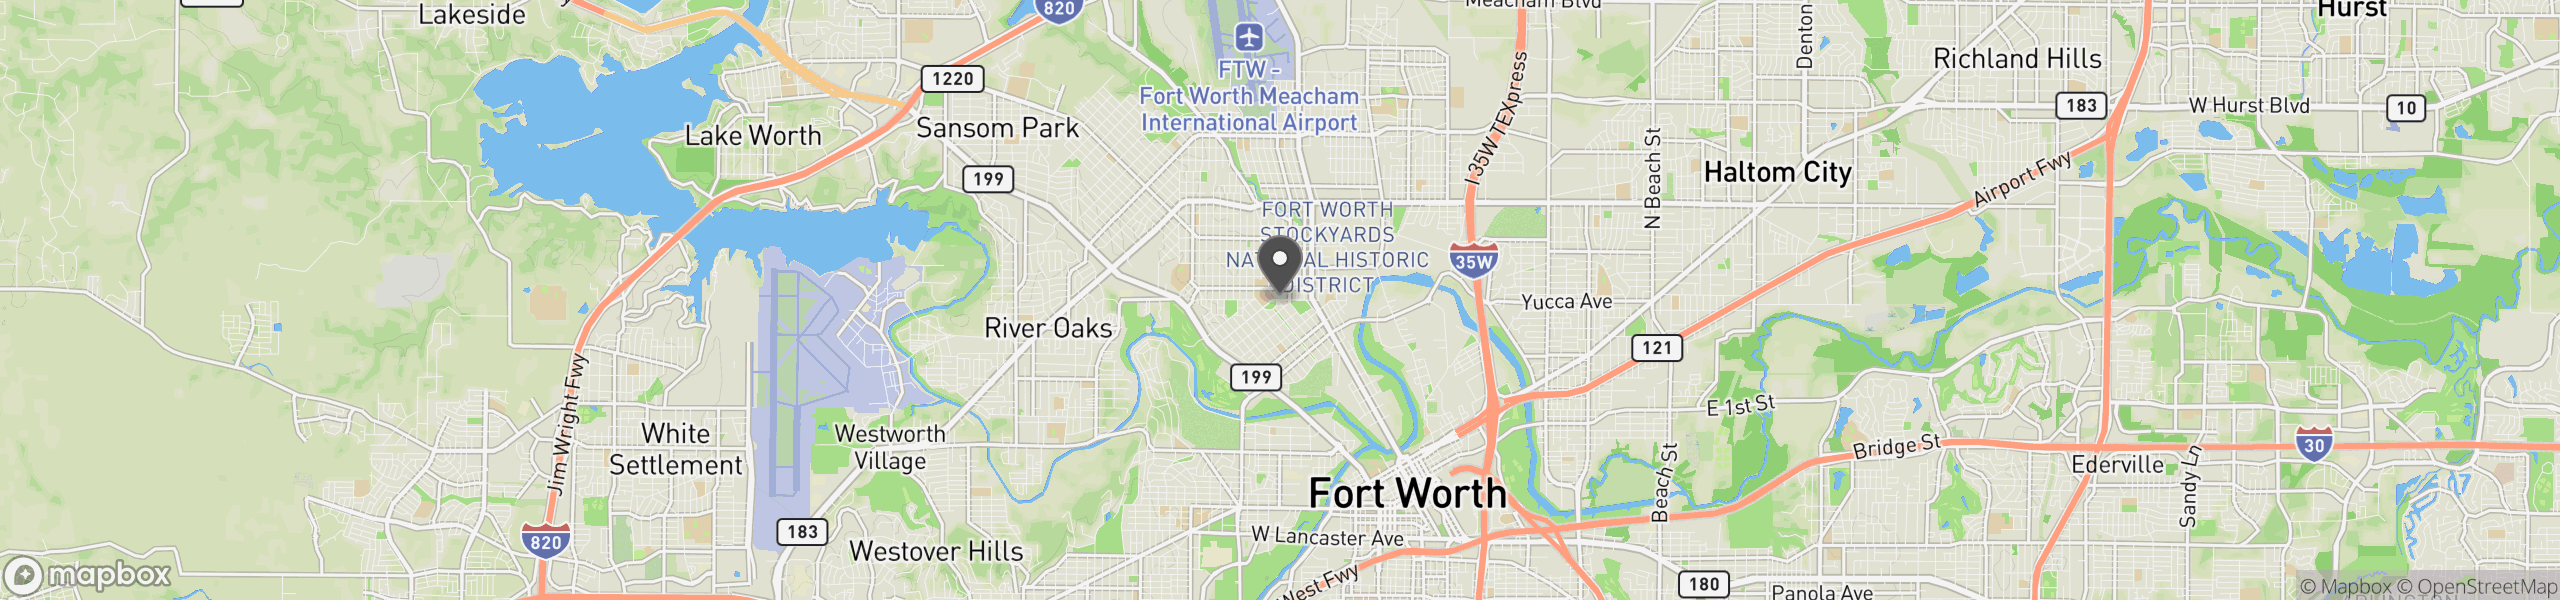 Fort Worth, TX 76164